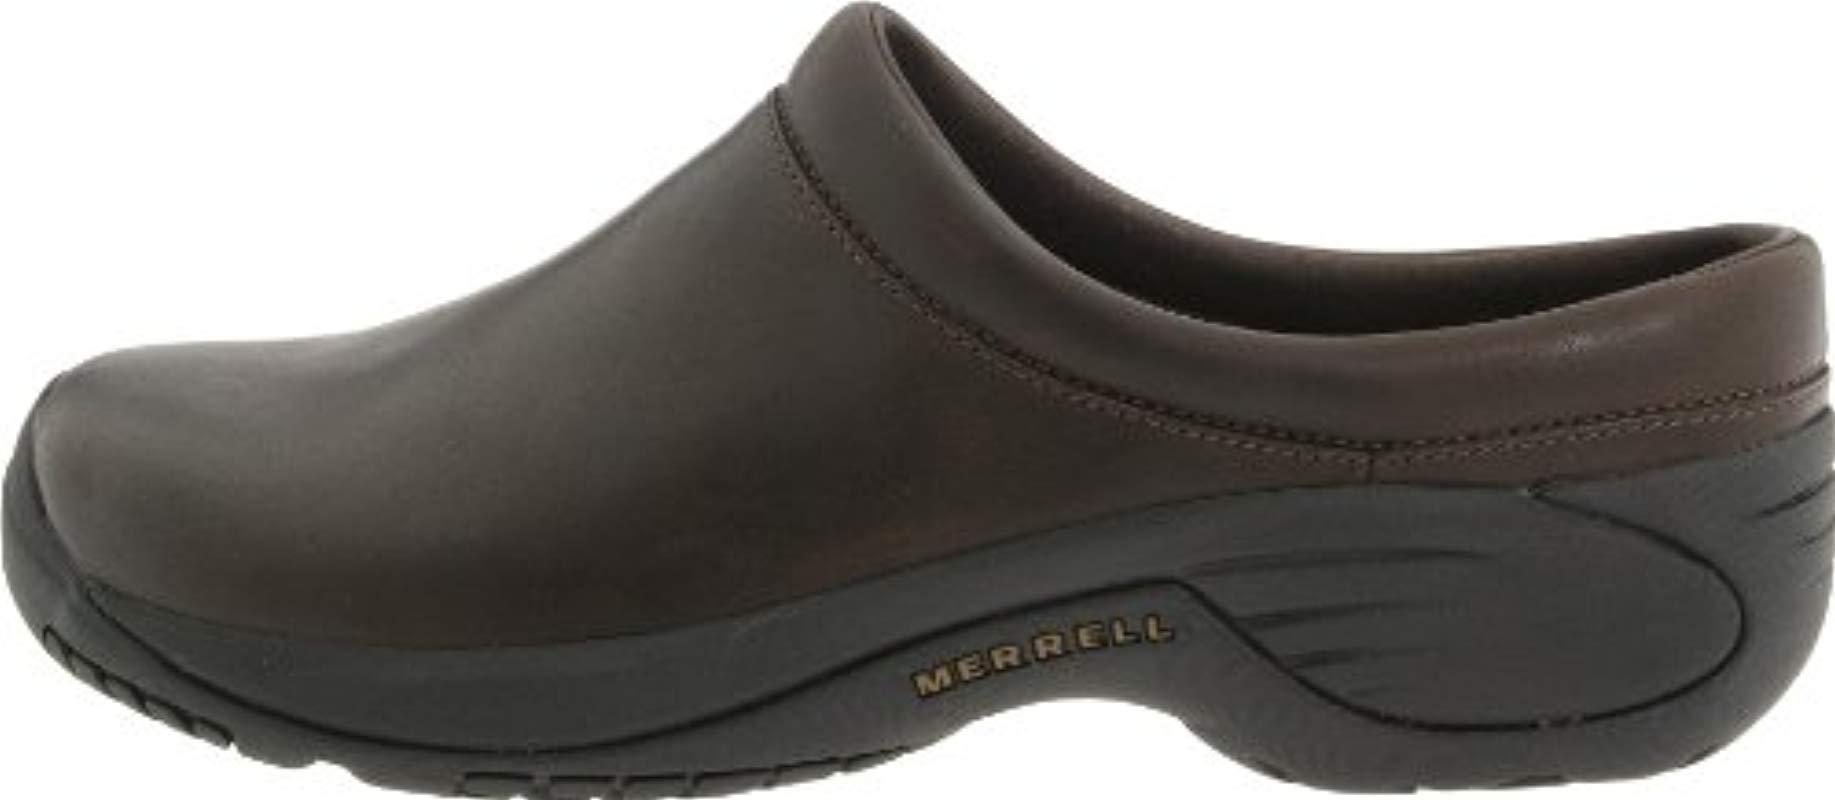 Merrell Rubber Encore Gust Slip-on Shoe in Brown for Men - Save 35% - Lyst